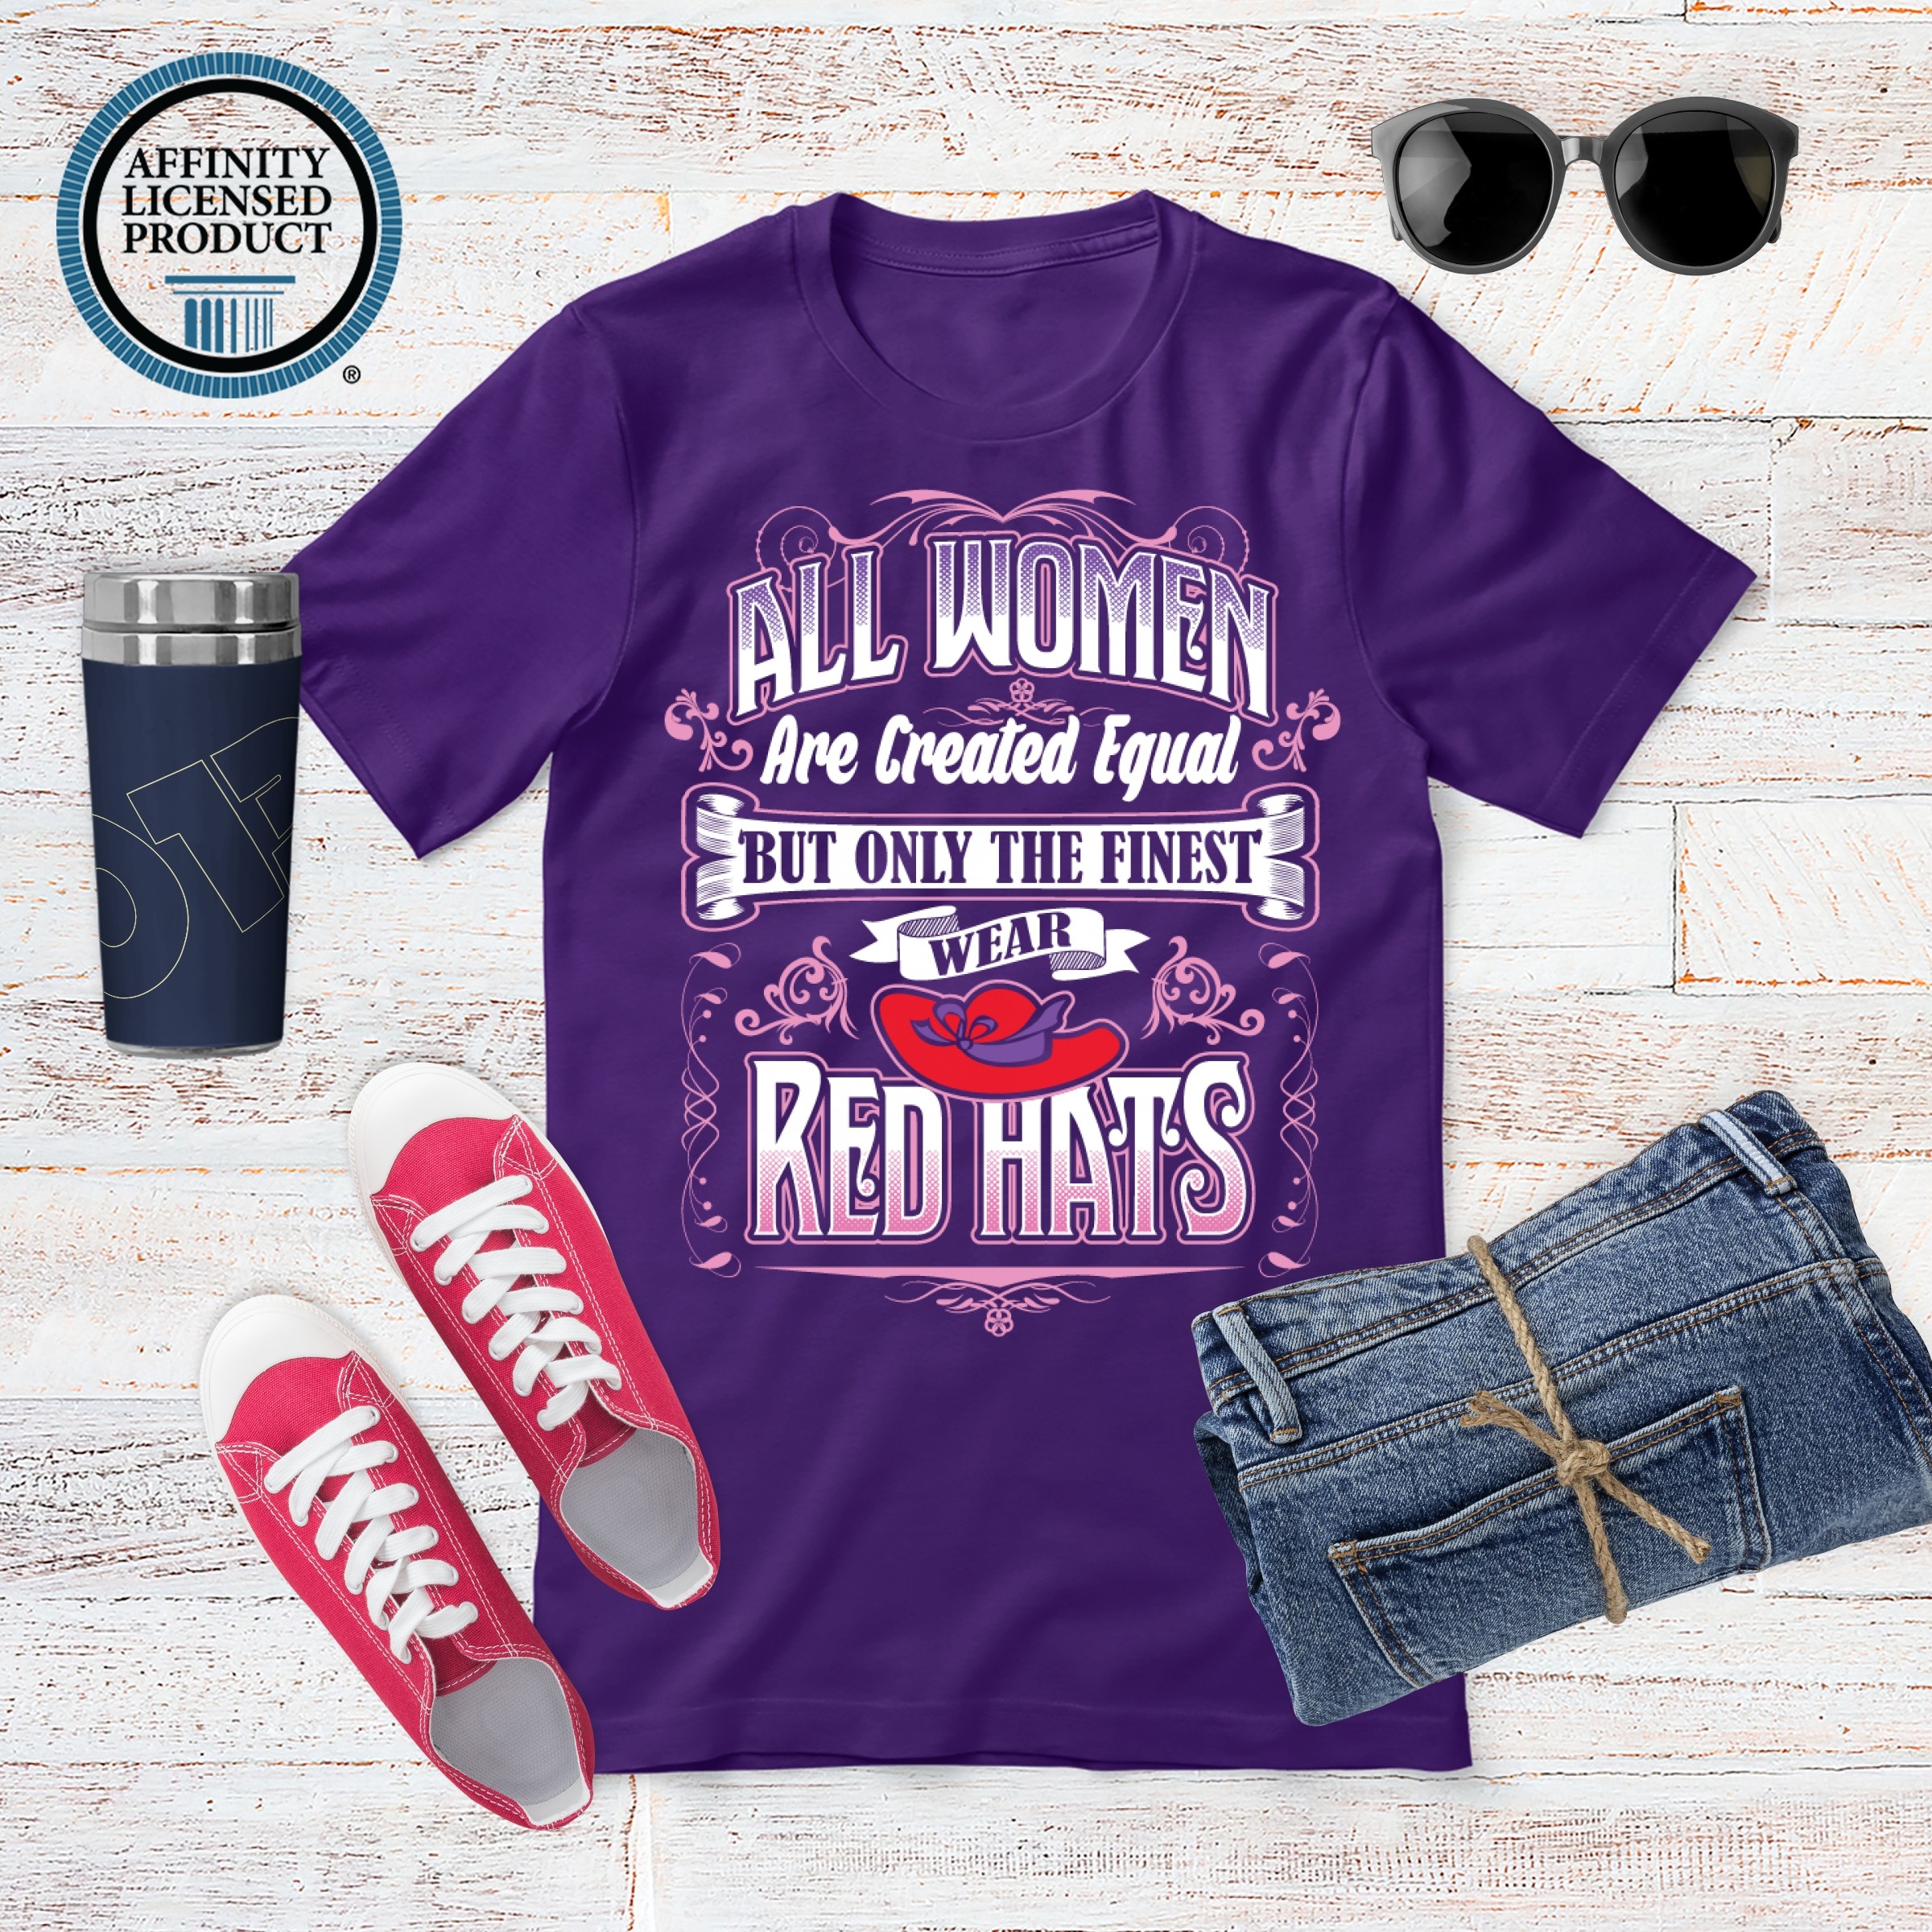 https://bbgreek.com/images/detailed/2/4831-POD-DTG-red-hat-society-create-equal-white-bella-canvas-flatlay-scene-women-affinity-team-purple.jpg